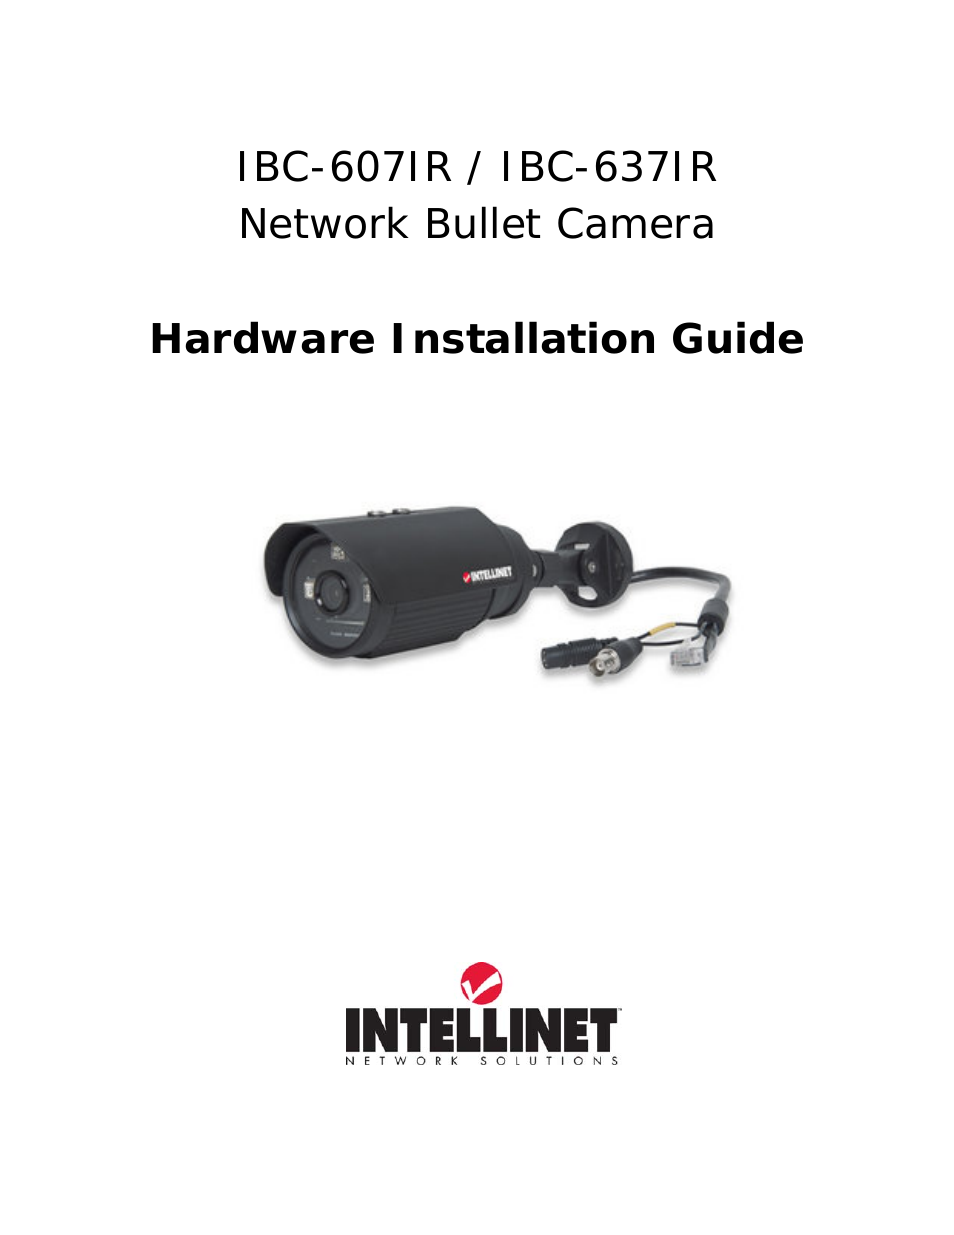 IBC-637IR Hardware Installation Guide